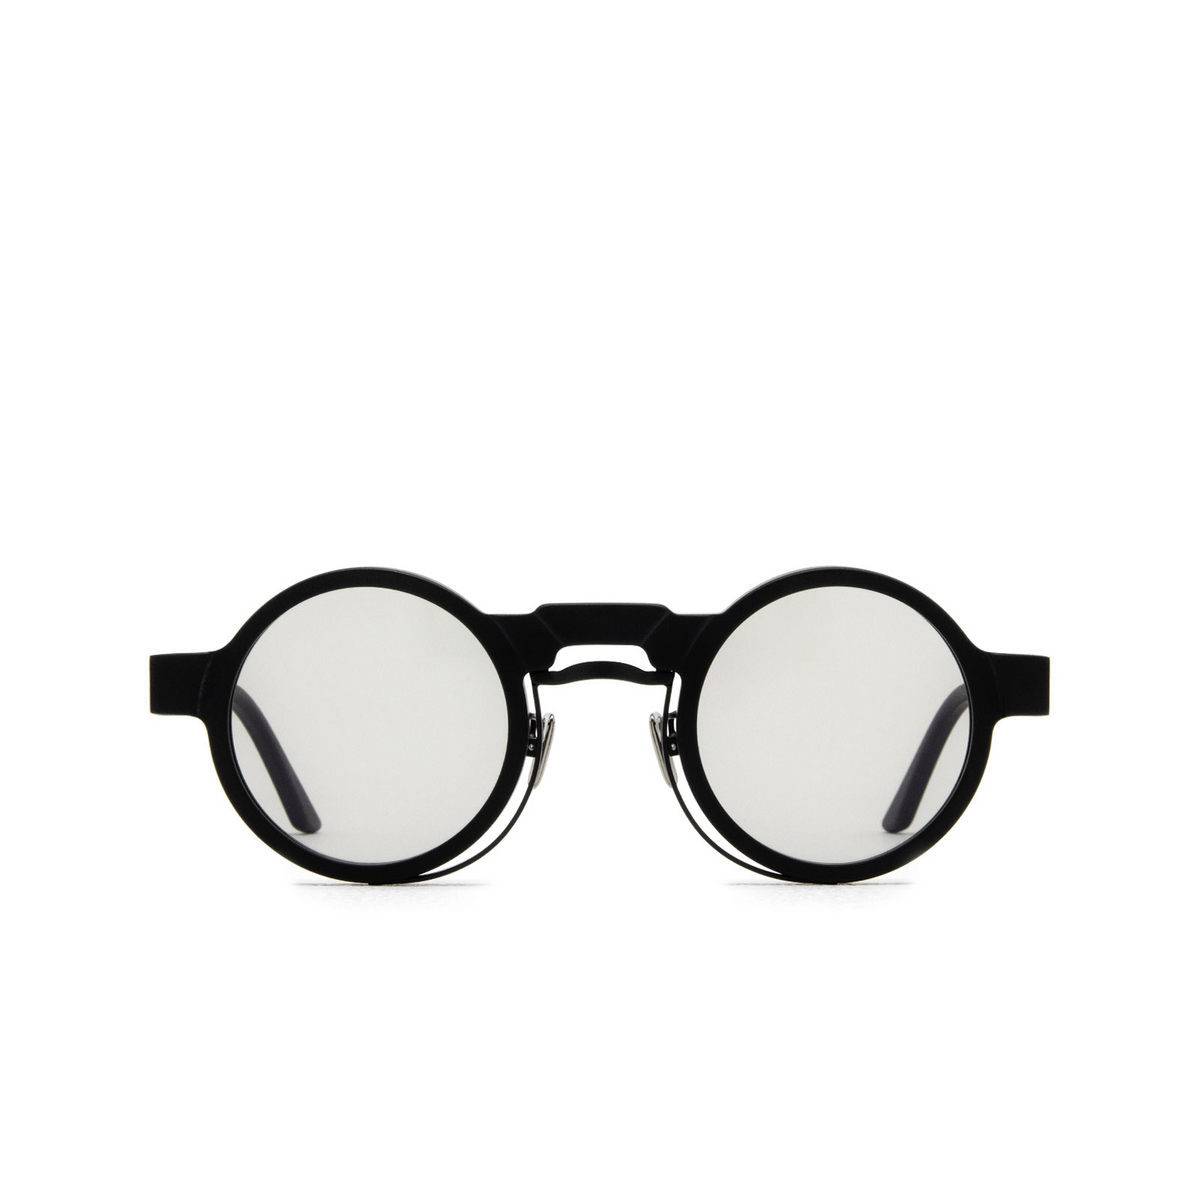 Kuboraum® Round Sunglasses: N3 color Bm Black Matt - front view